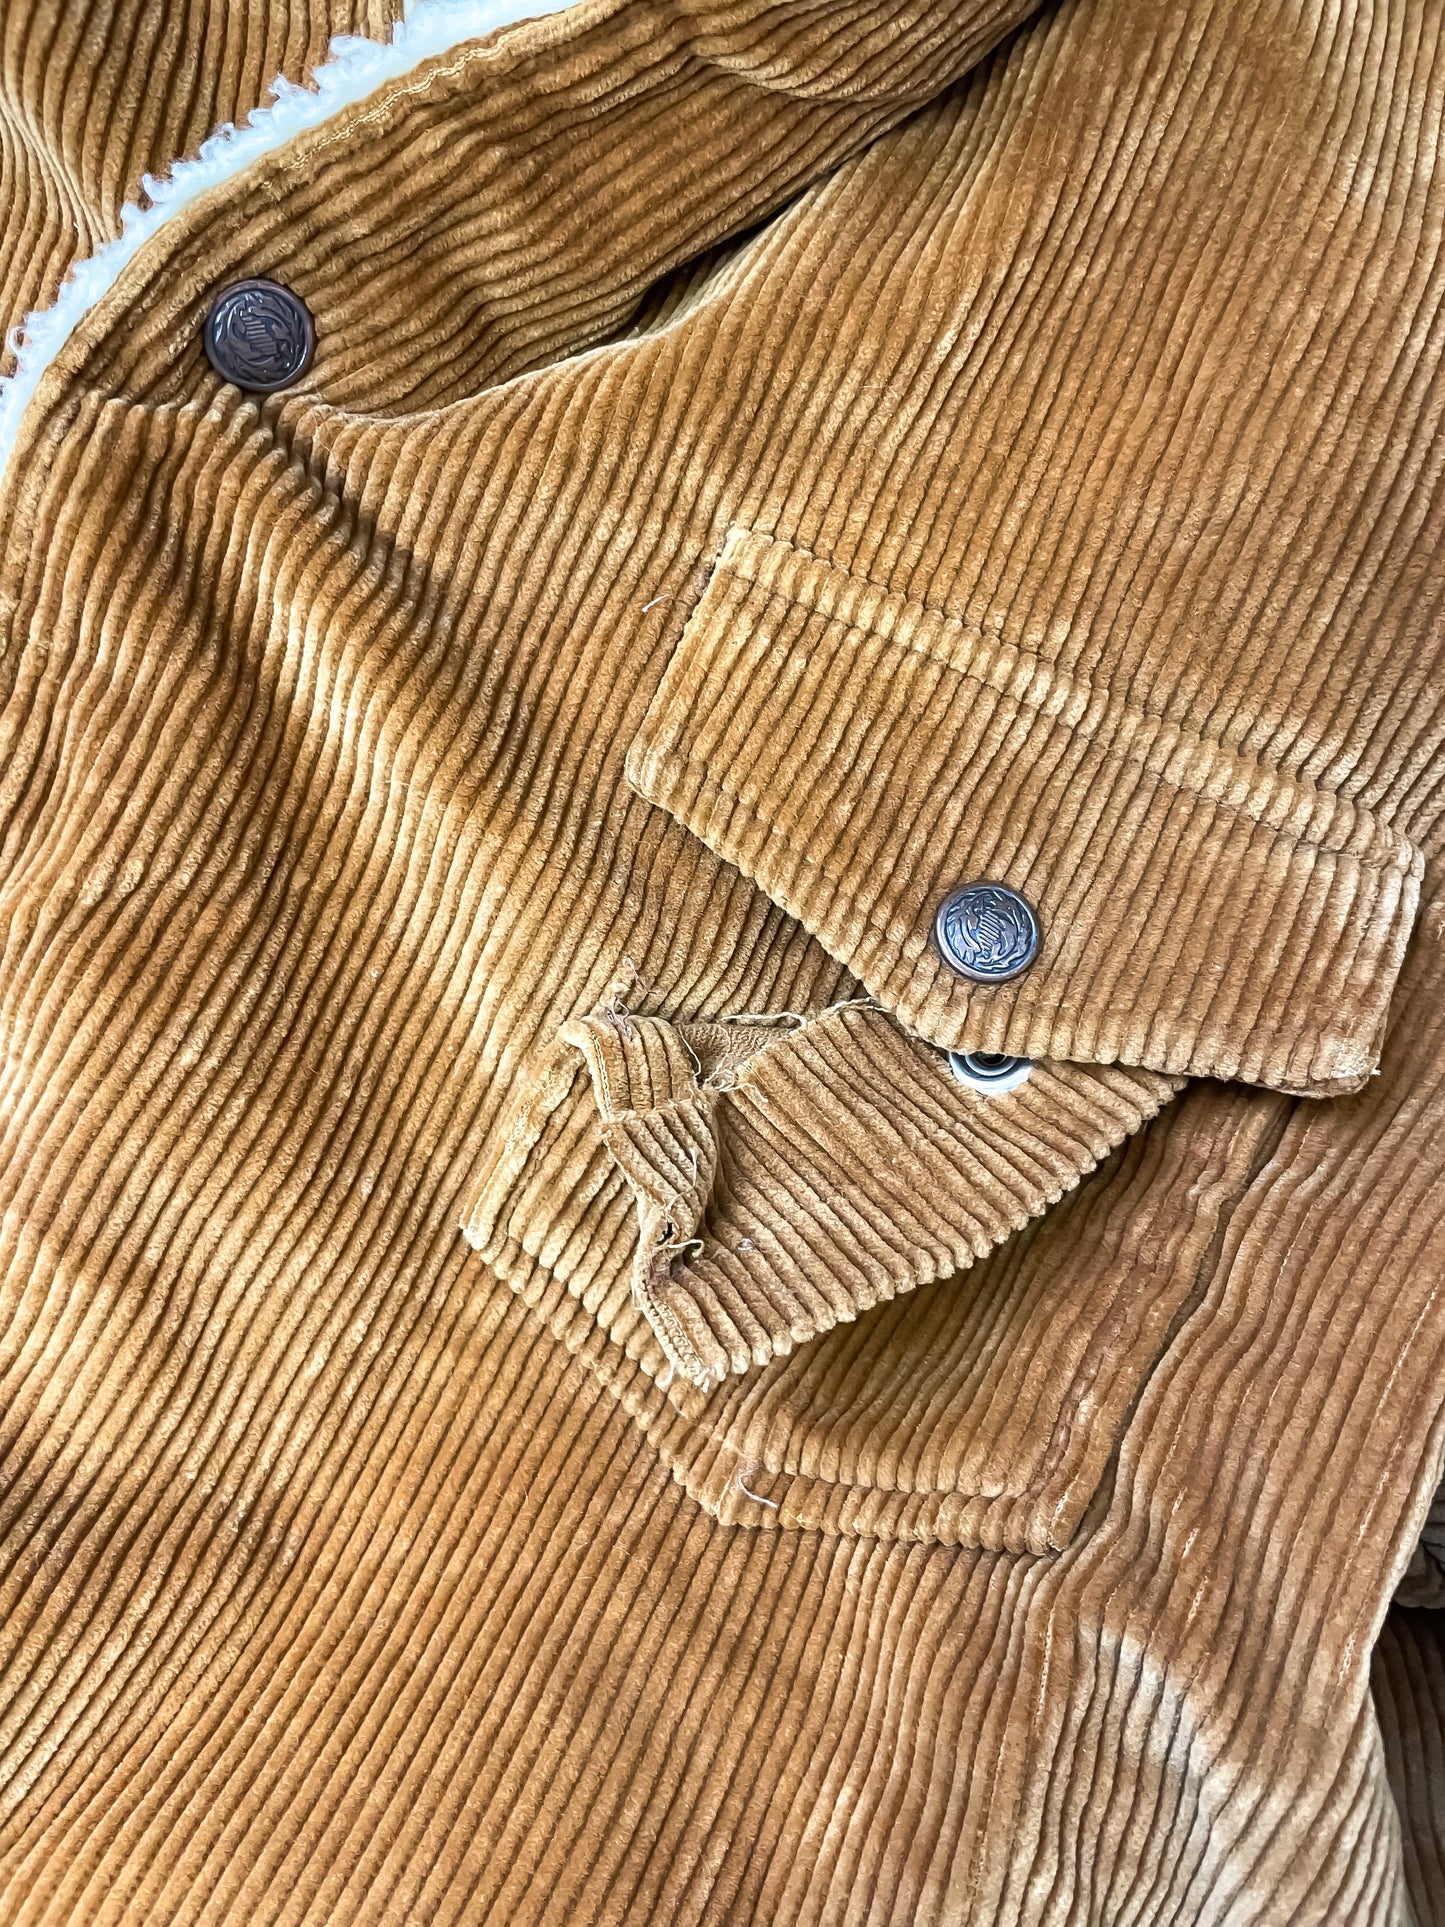 Vintage Distressed Sherpa Lined Corduroy Jacket